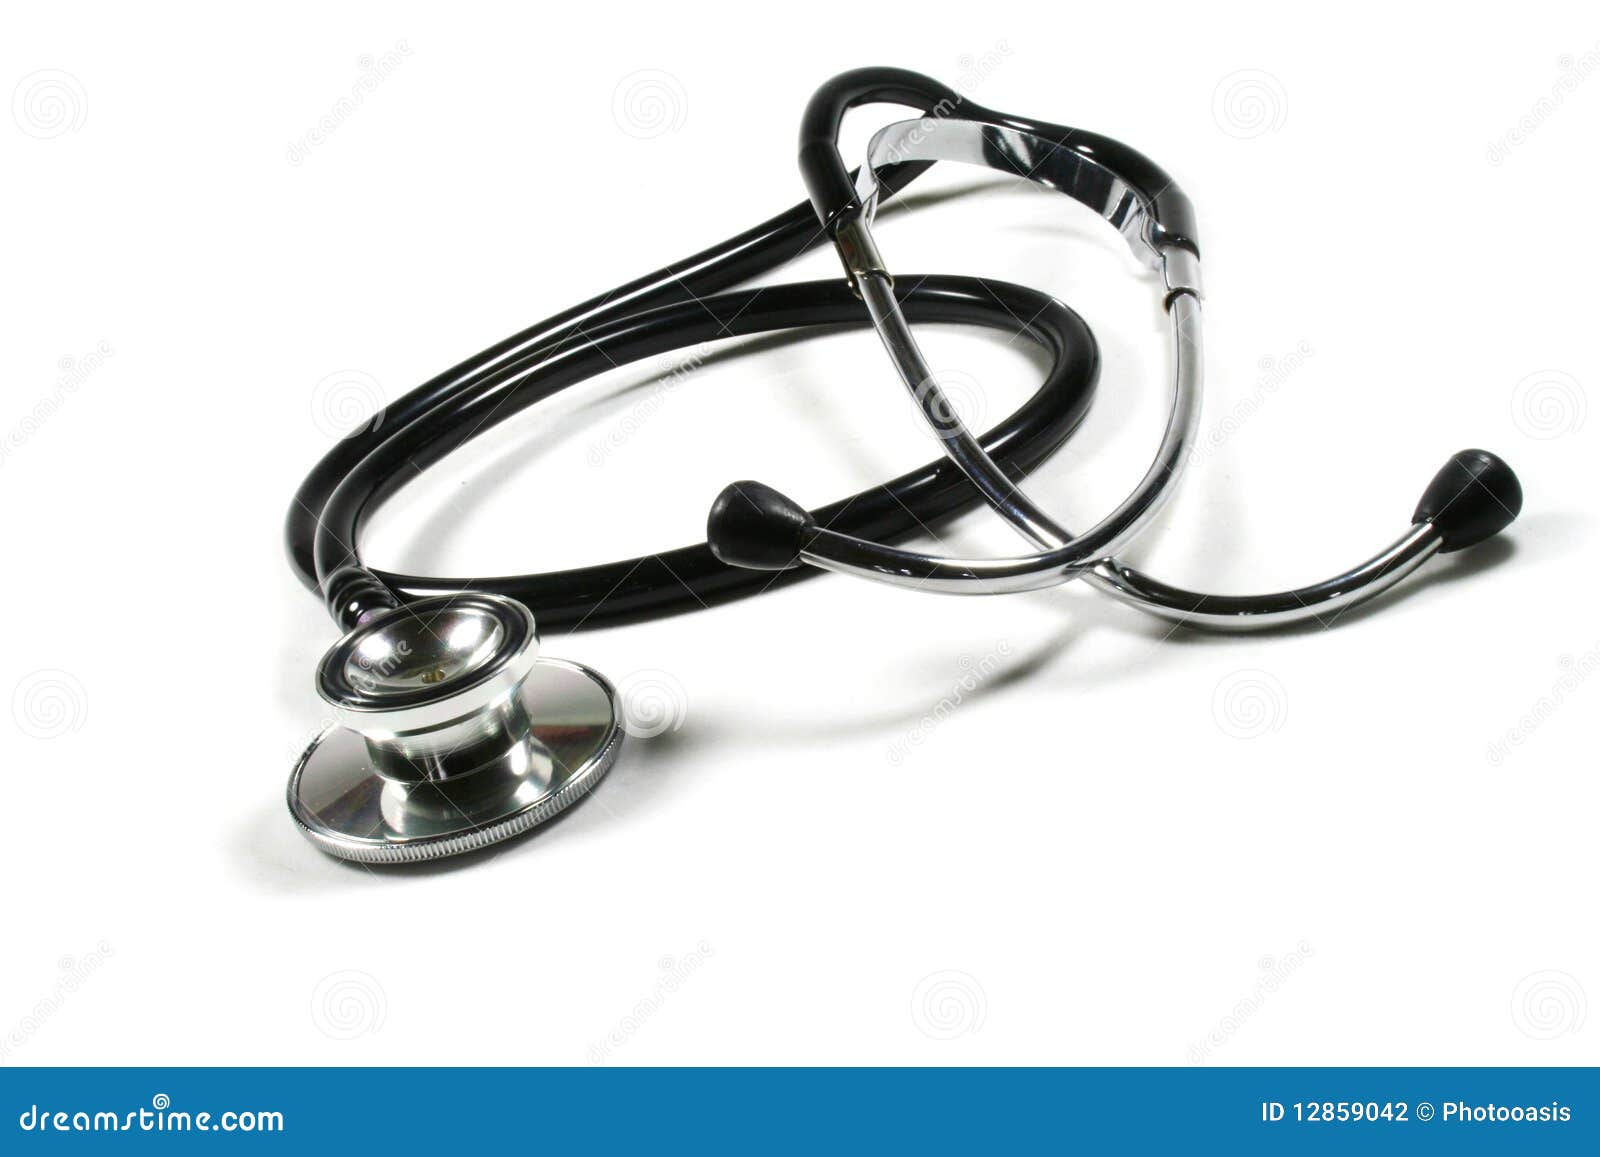 Stethoscope stock photo. Image of listening, membrane - 12859042